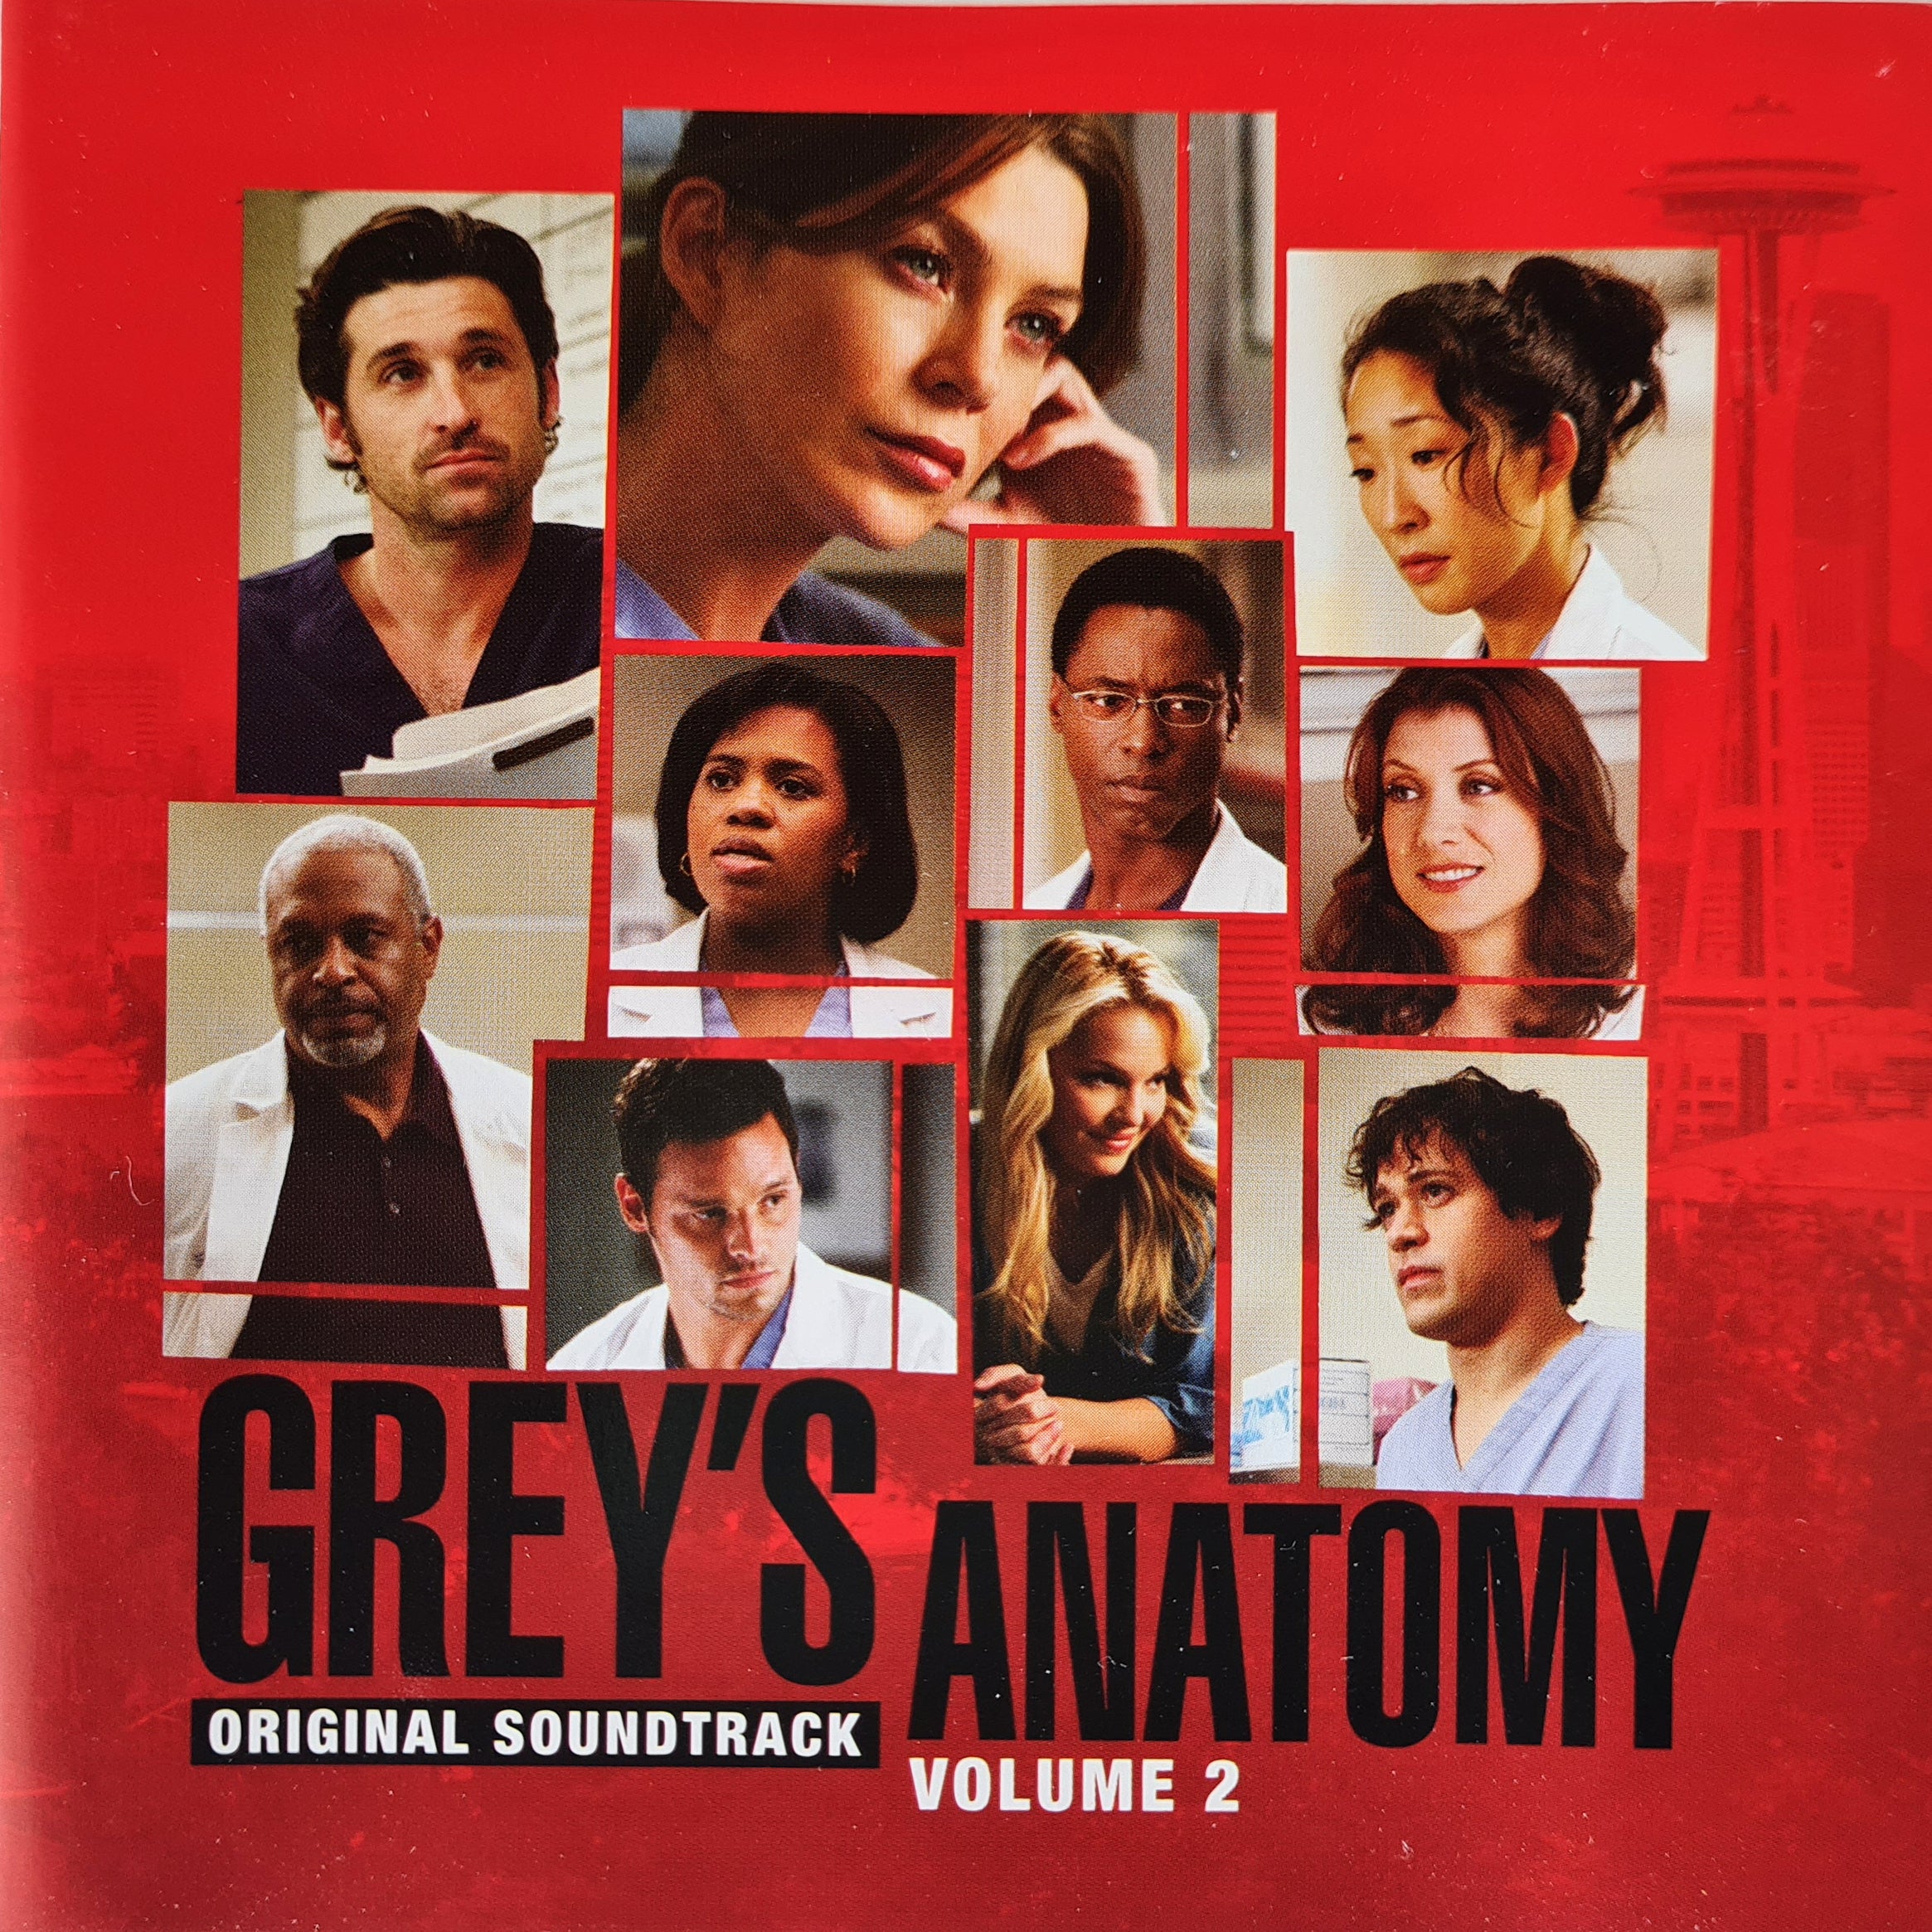 Grey's Anatomy - Original Soundtrack Volume 2 (CD)